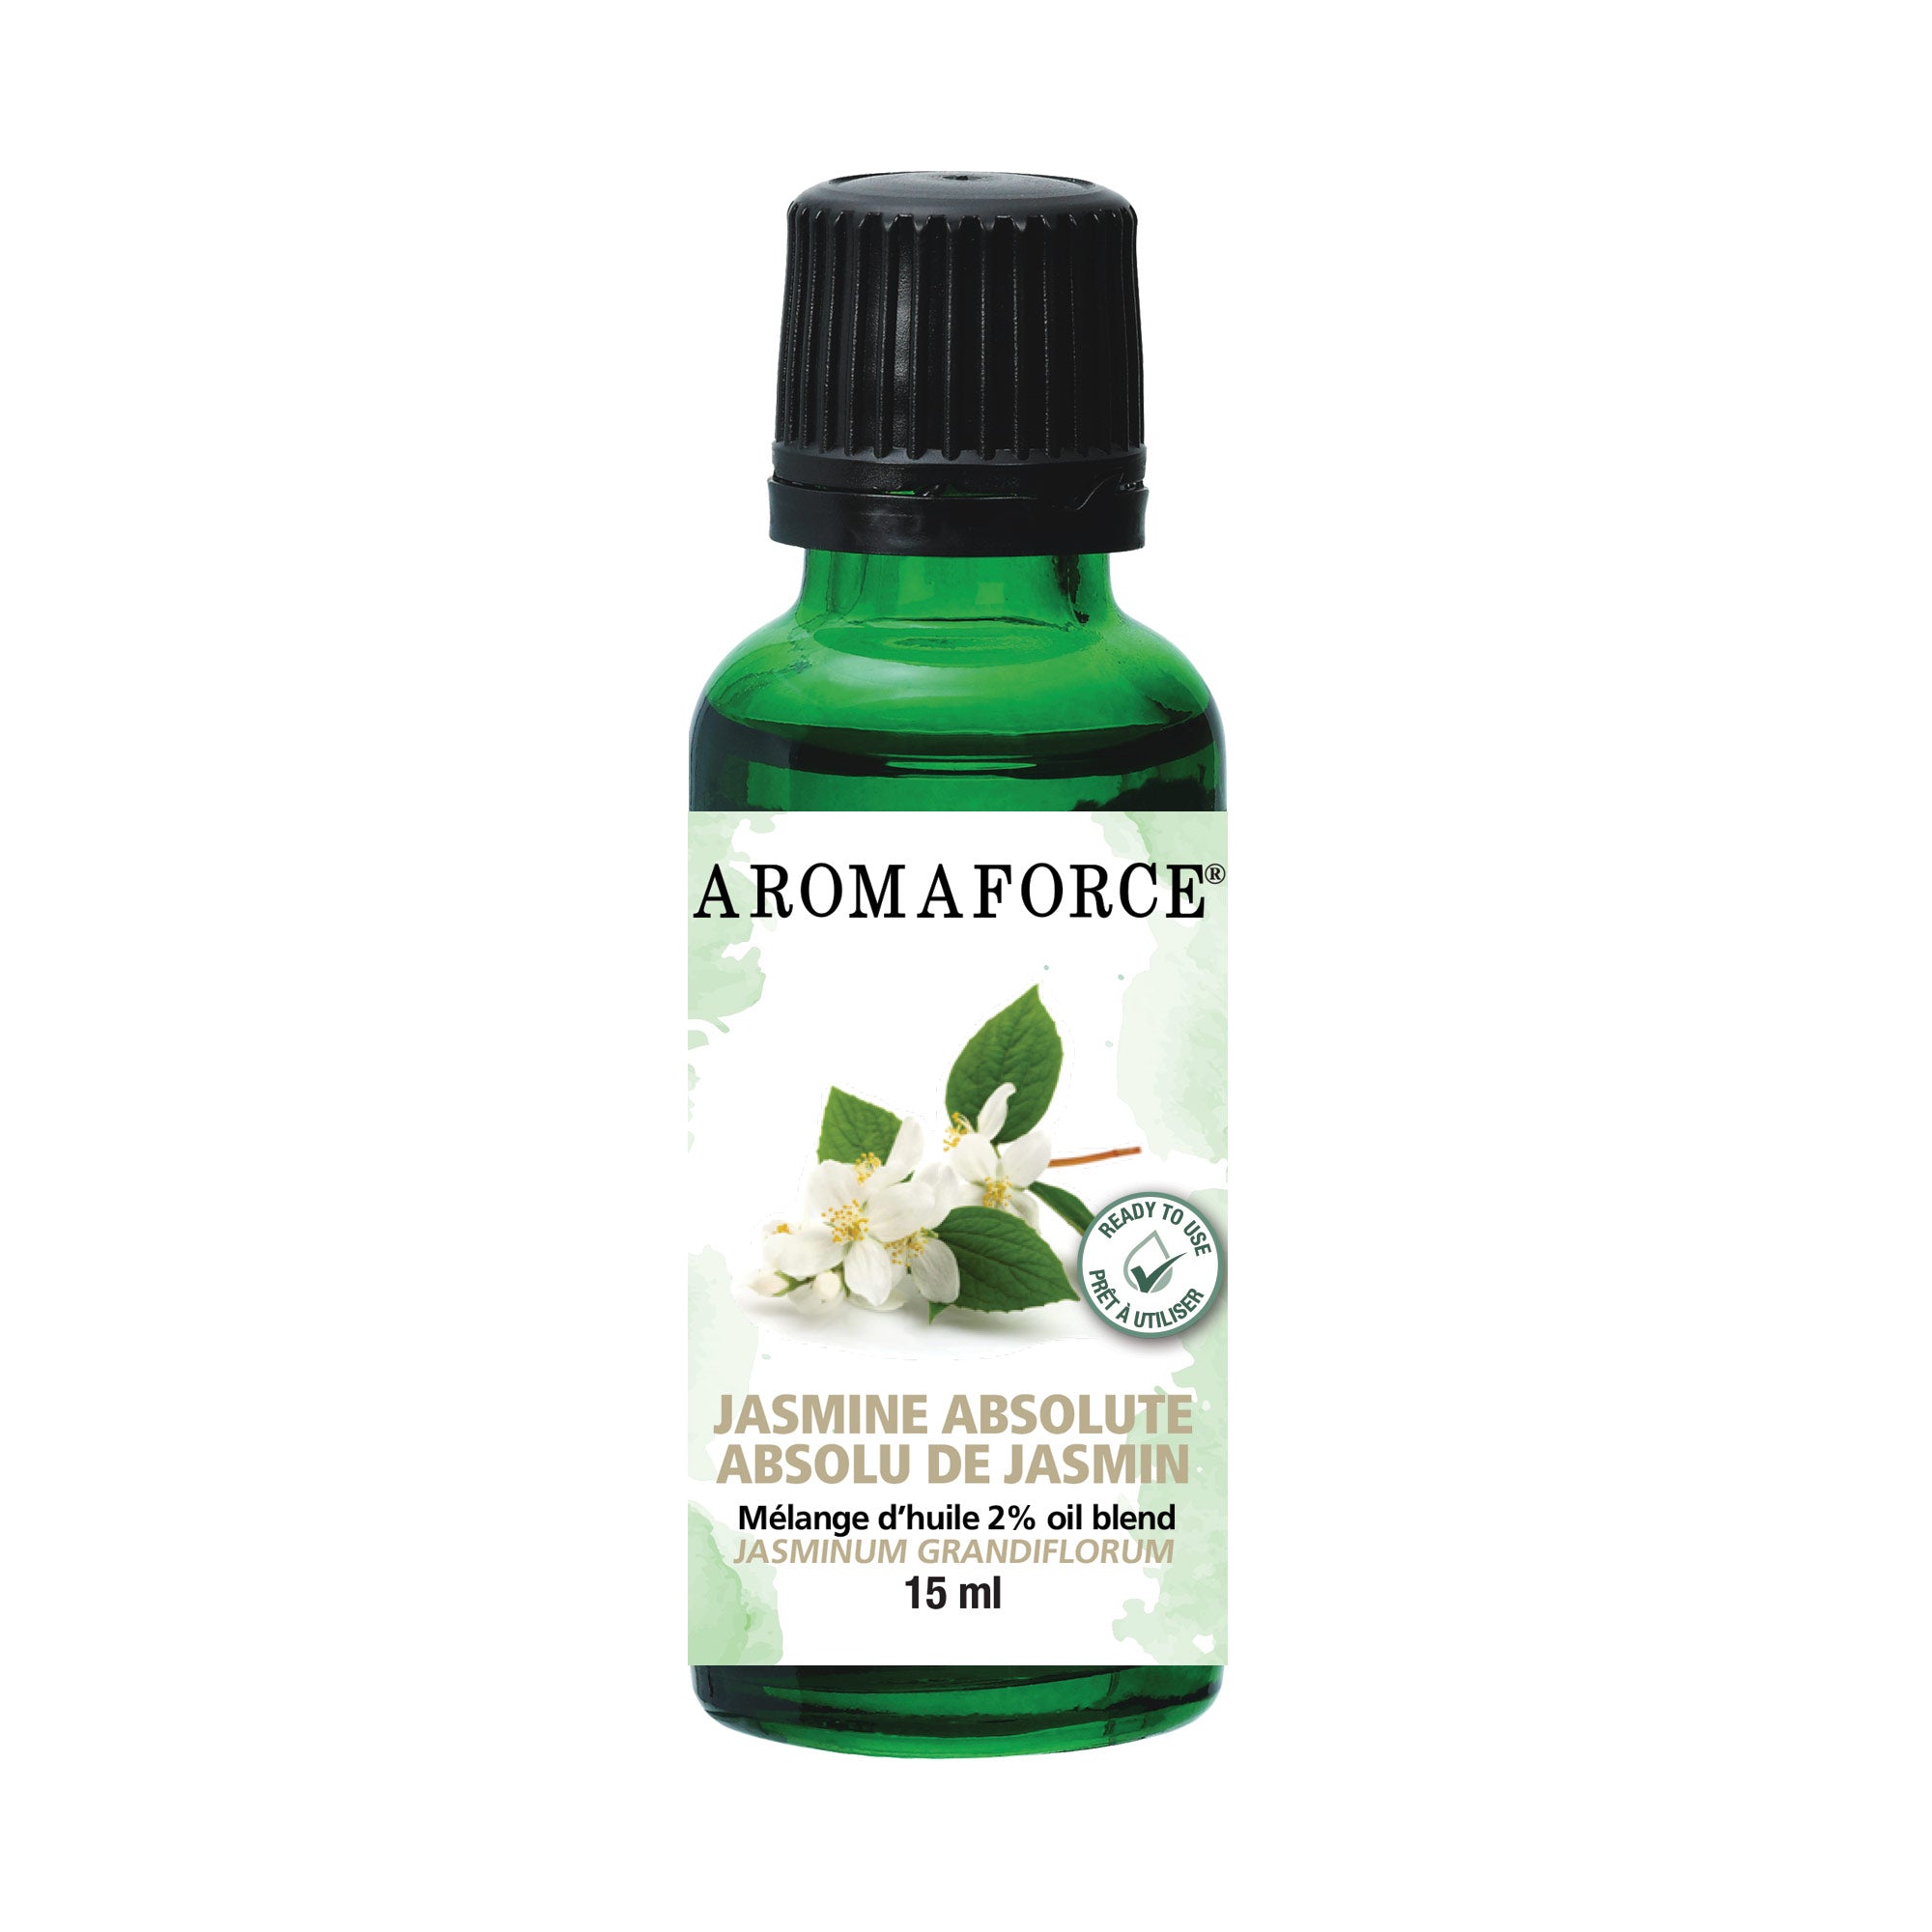 Jasmine Absolute Essential Oil in Jojoba Oil Blend 15mL - Aromaforce - A.Vogel Canada